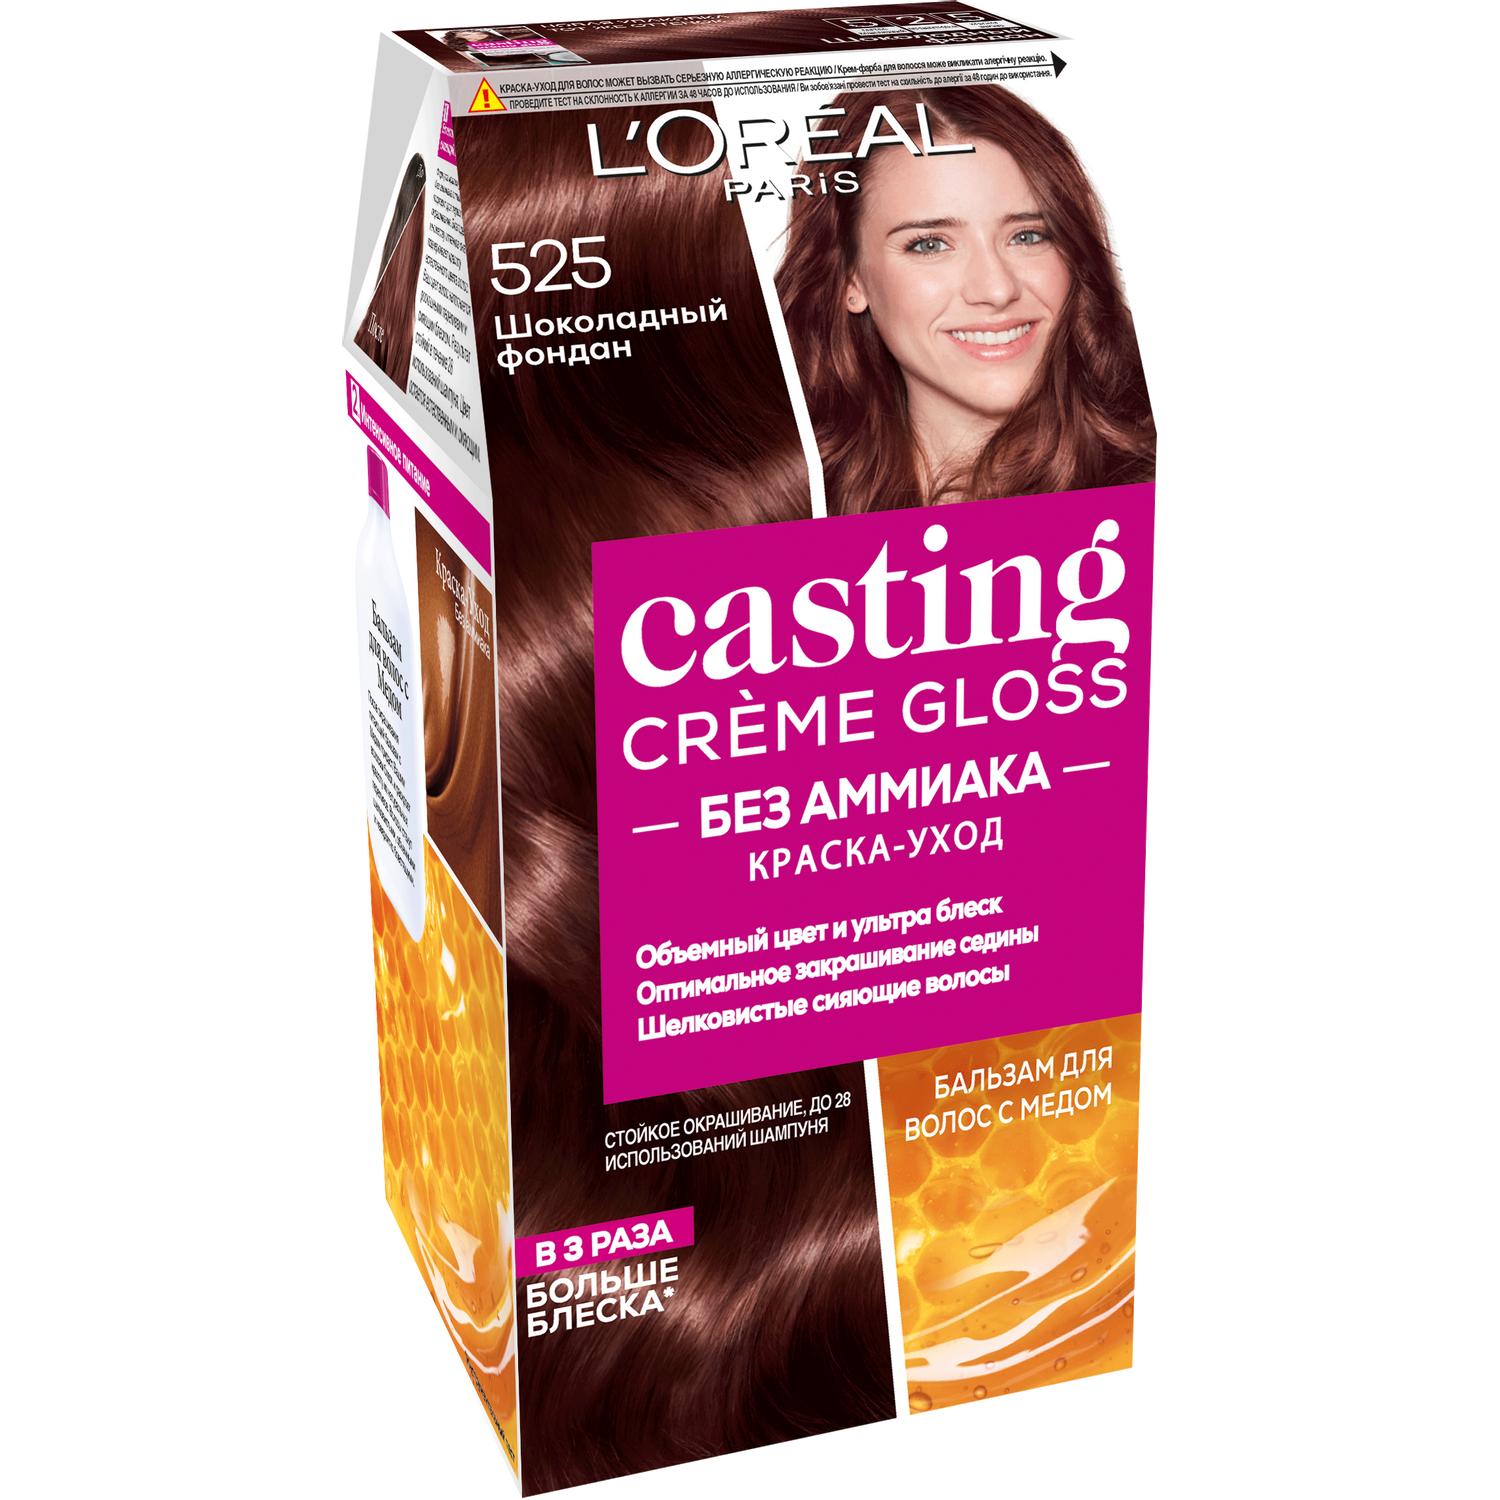 Краска для волос L'Oreal Paris Casting Creme Gloss 525 Шоколадный фондан краска для волос l’oreal excellence creme 6 темно русый